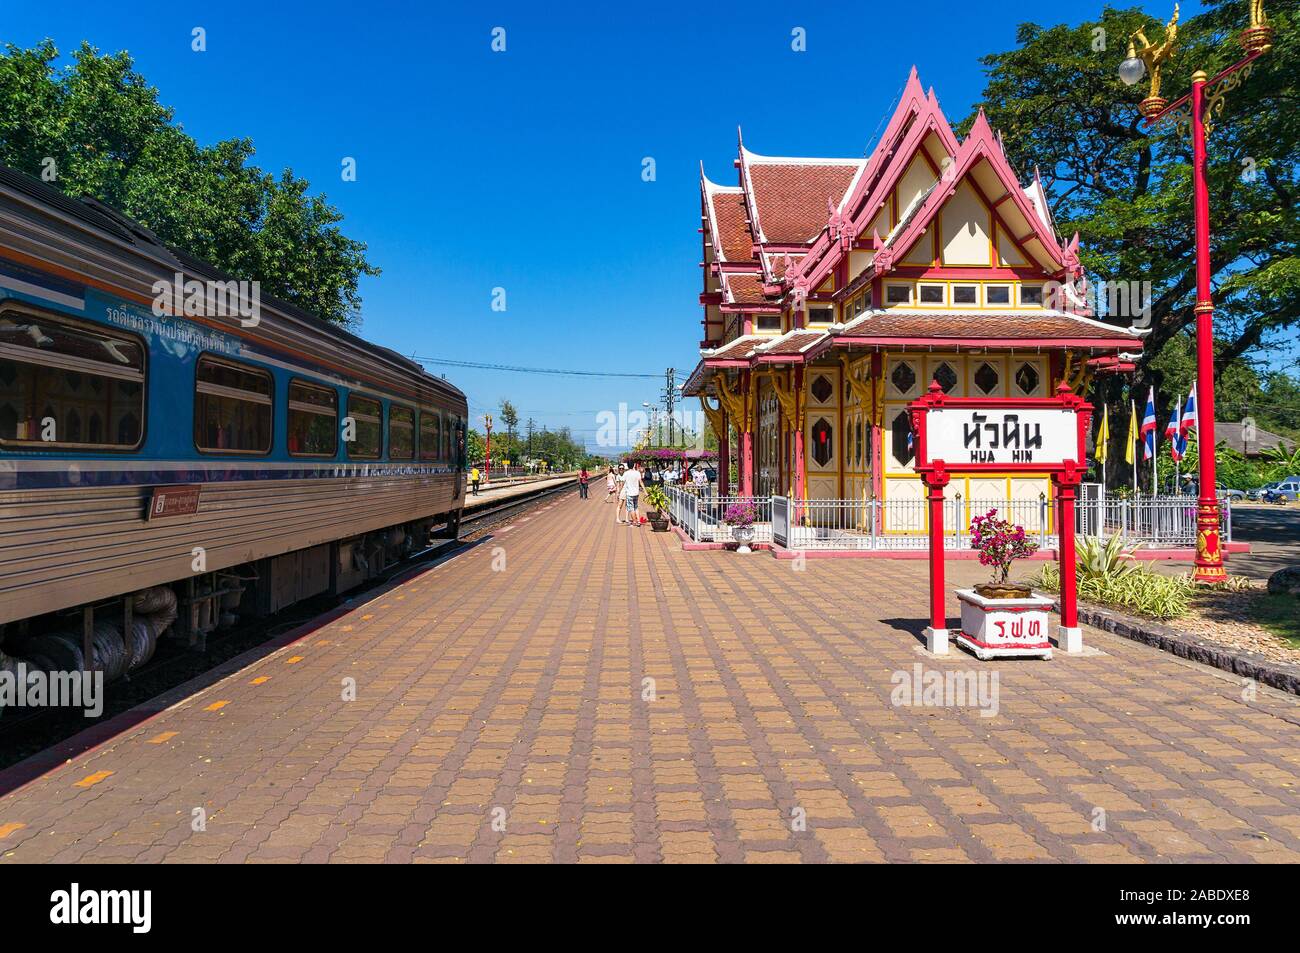 Hua Hin, Thailand - December 26, 2015: Hua Hin railway station platform with view of arriving train Stock Photo